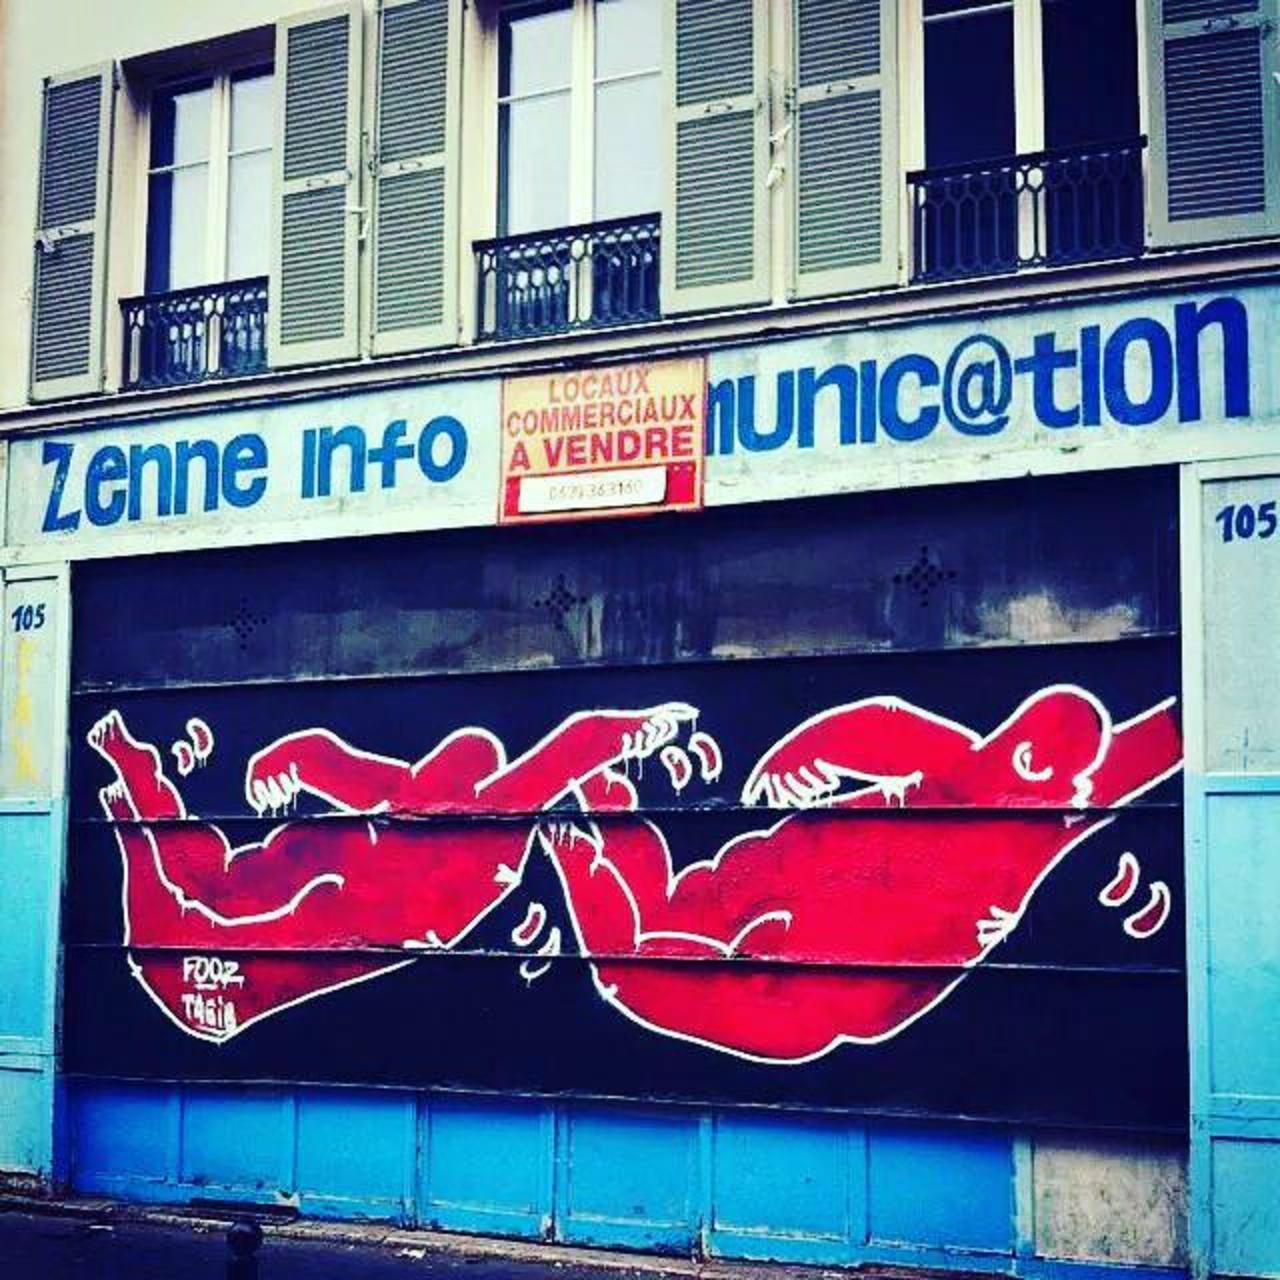 #Paris #graffiti photo by @senyorerre http://ift.tt/1M2YGHi #StreetArt https://t.co/Kdx0Rm657p